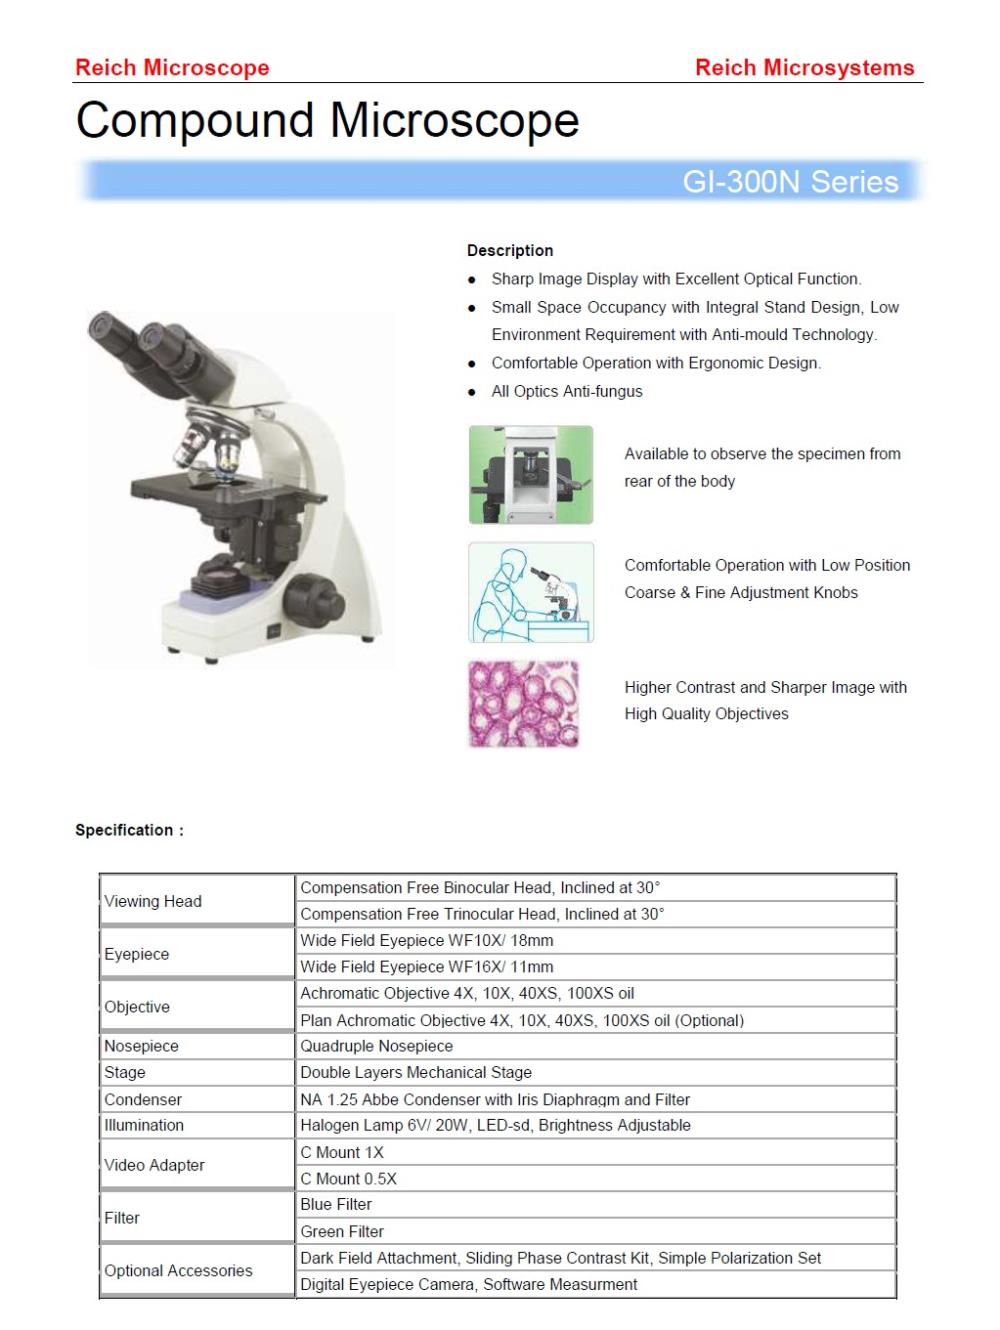 Compound Microscope (กล้องจุลทรรศน์),#ขาย #จำหน่าย #สินค้าlab #กล้องจุลทรรศน์ #microscope #compoundmicroscope #lab #nir #eec #โรงงาน #ตัวแทนจำหน่าย #dealer #distributor #qa #qc #industrial #นิคมอุตสาหกรรม #อุตสาหกรรม #สินค้าอุตสาหกรรม #รับเหมา #ก่อสร้าง #construction #engineering #workicon #workicontech,,Engineering and Consulting/Laboratories